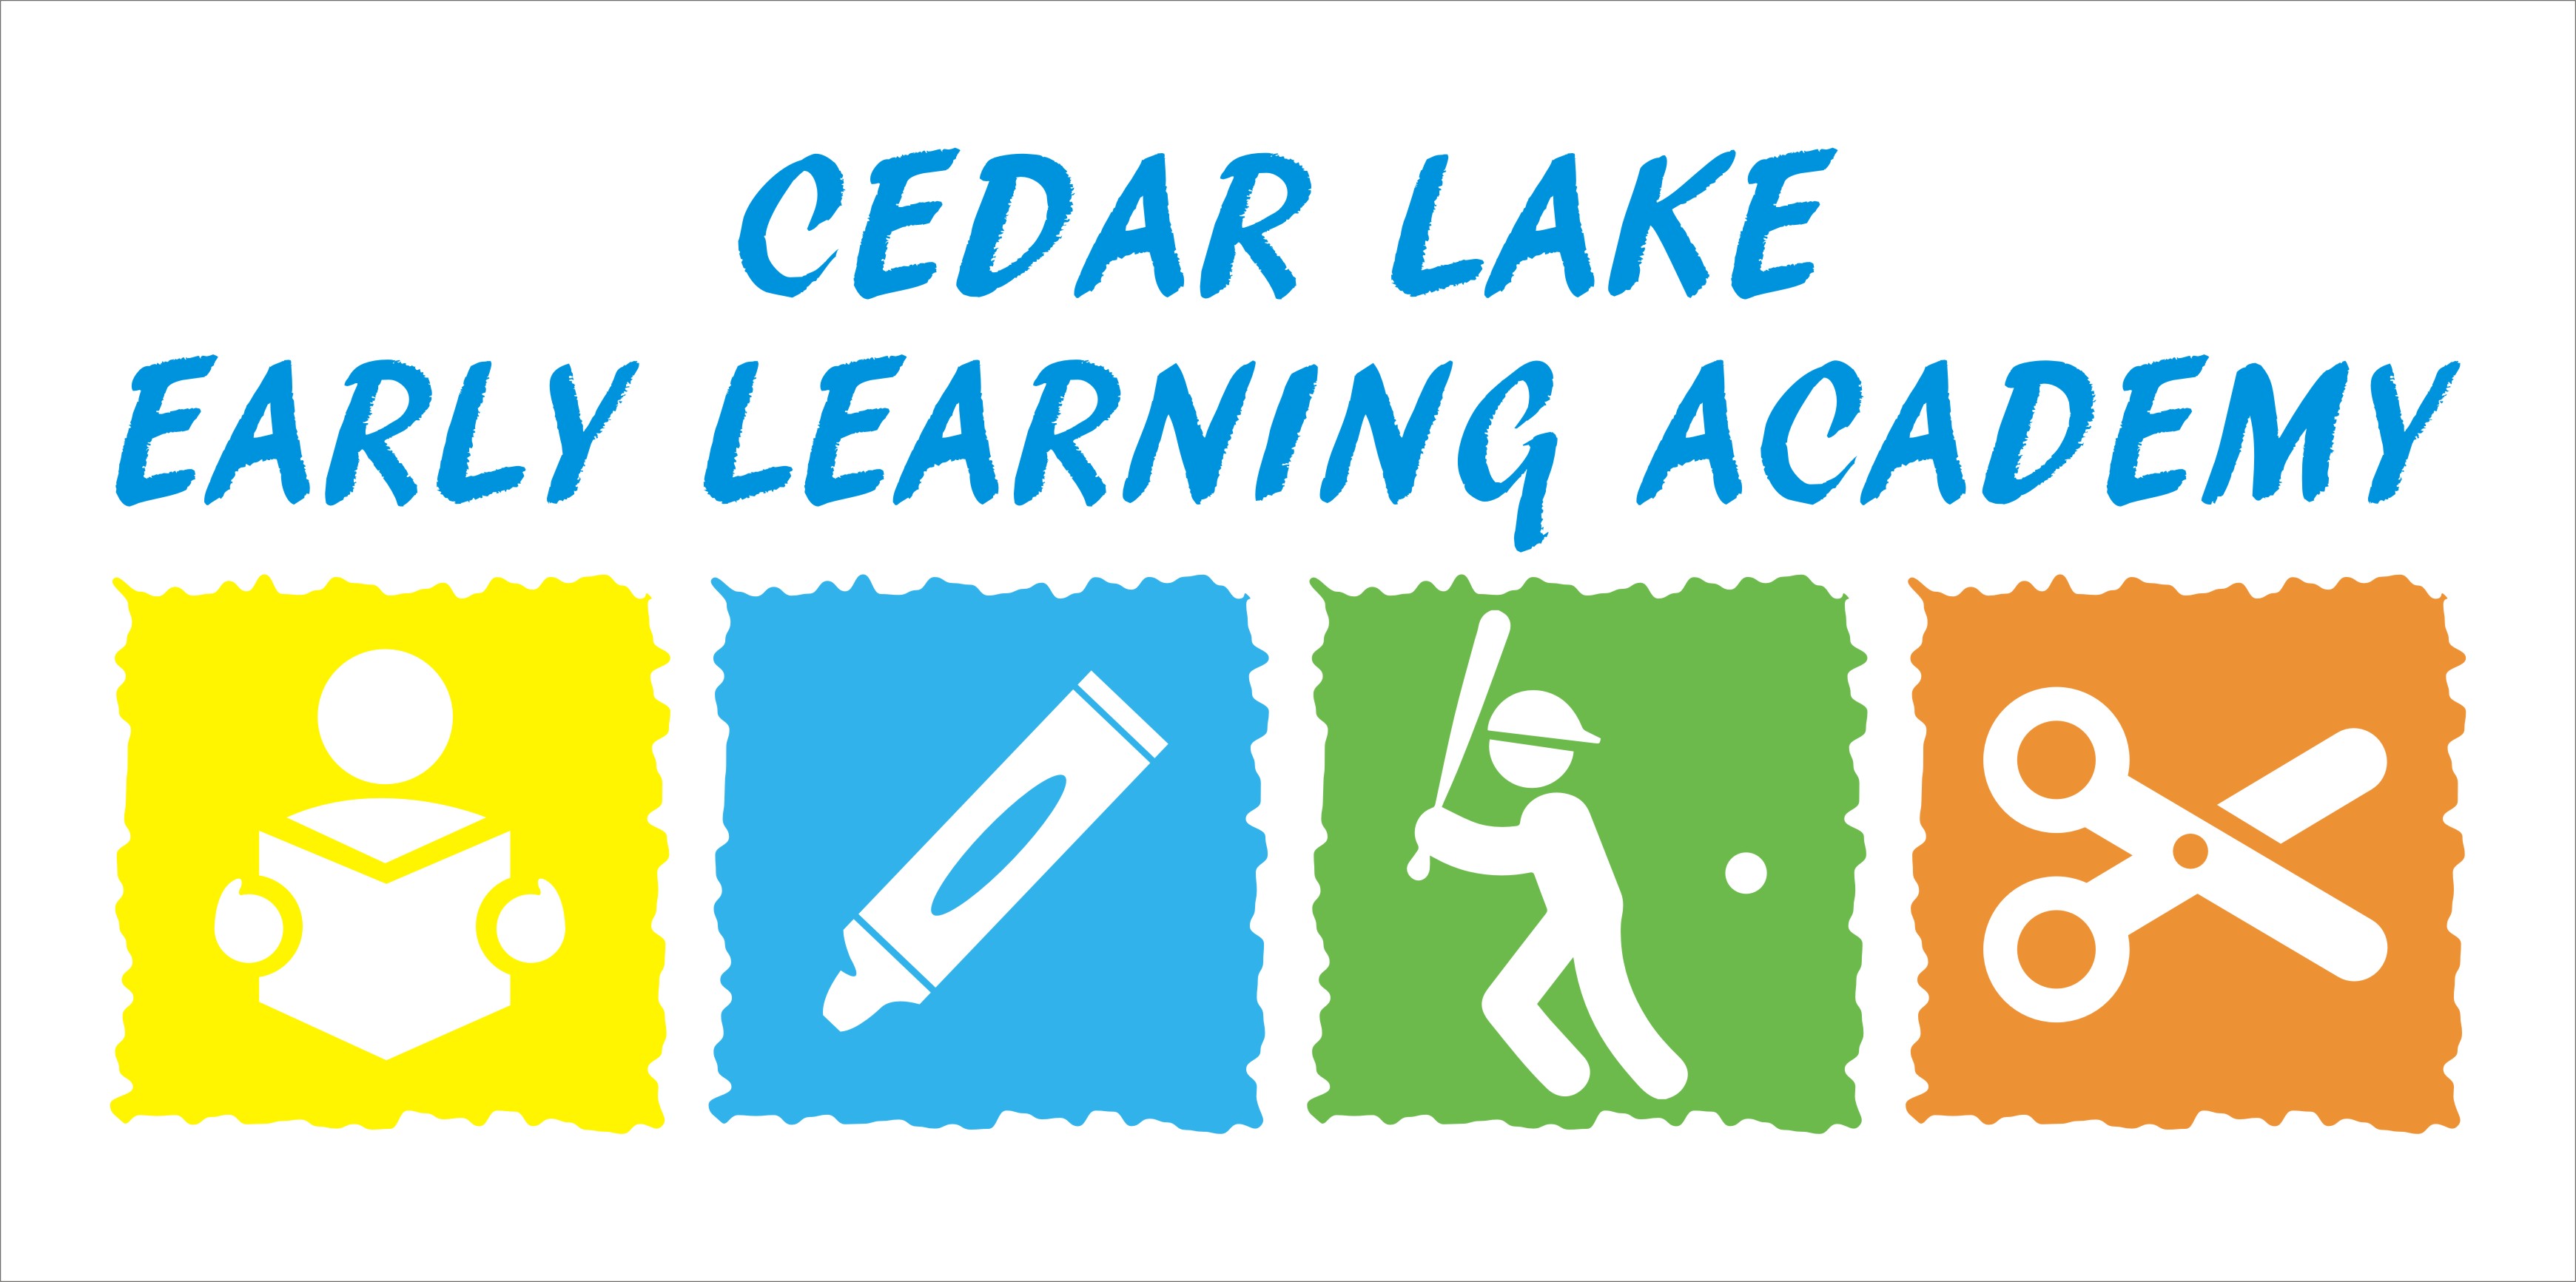 Cedar Lake Early Learning Academy